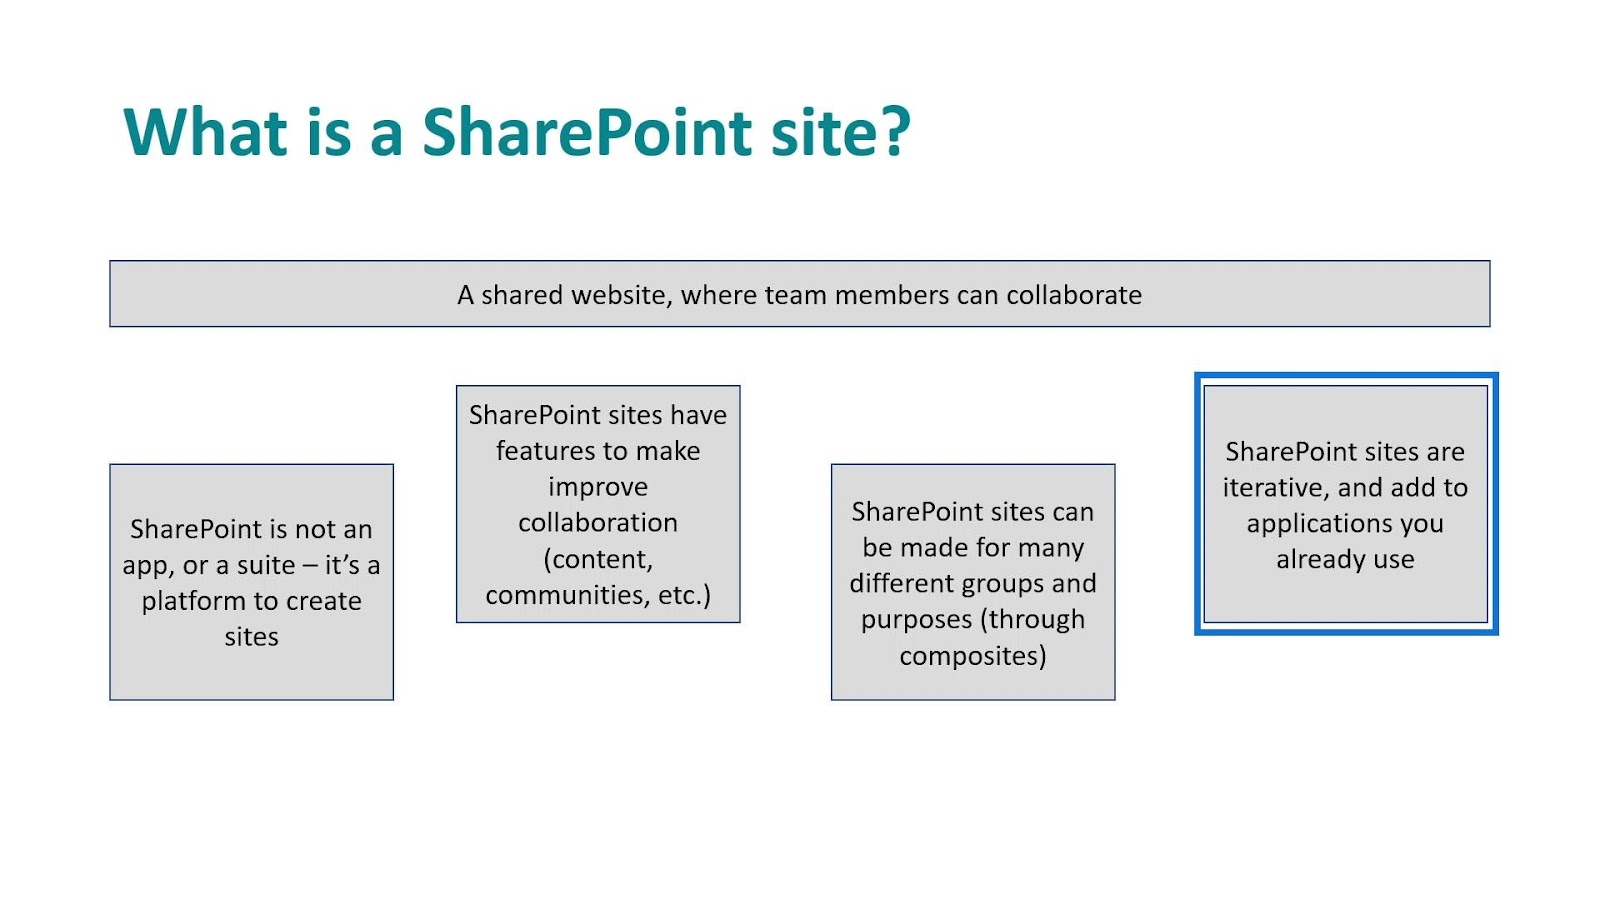 SharePoint sites